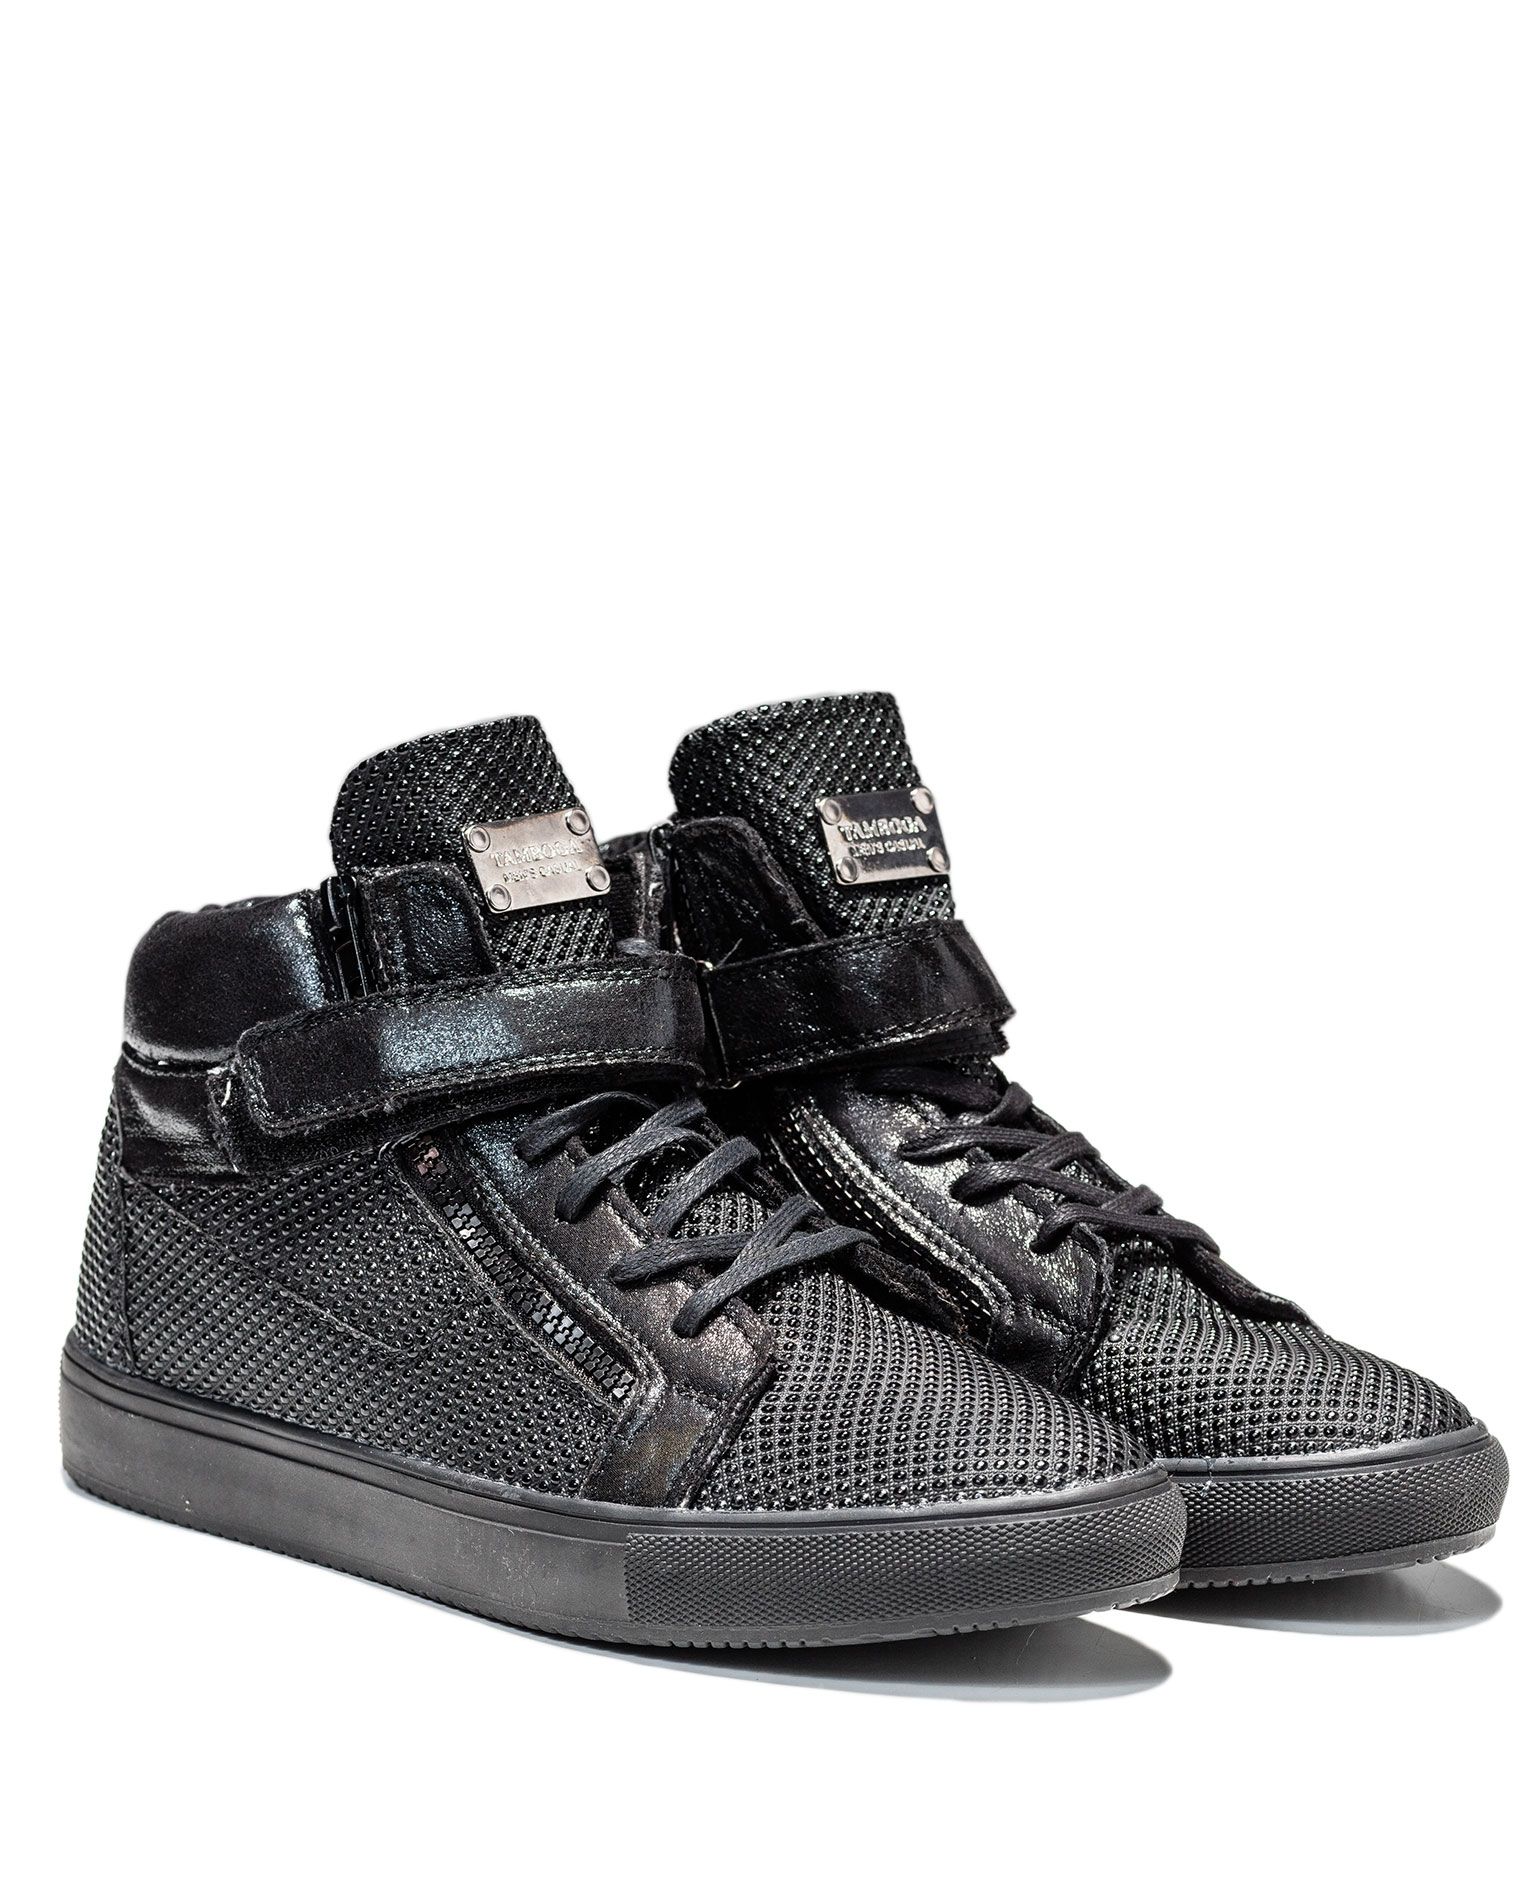 Black Spike Sneakers Jerone - 5531 - Shoes - Jerone.com